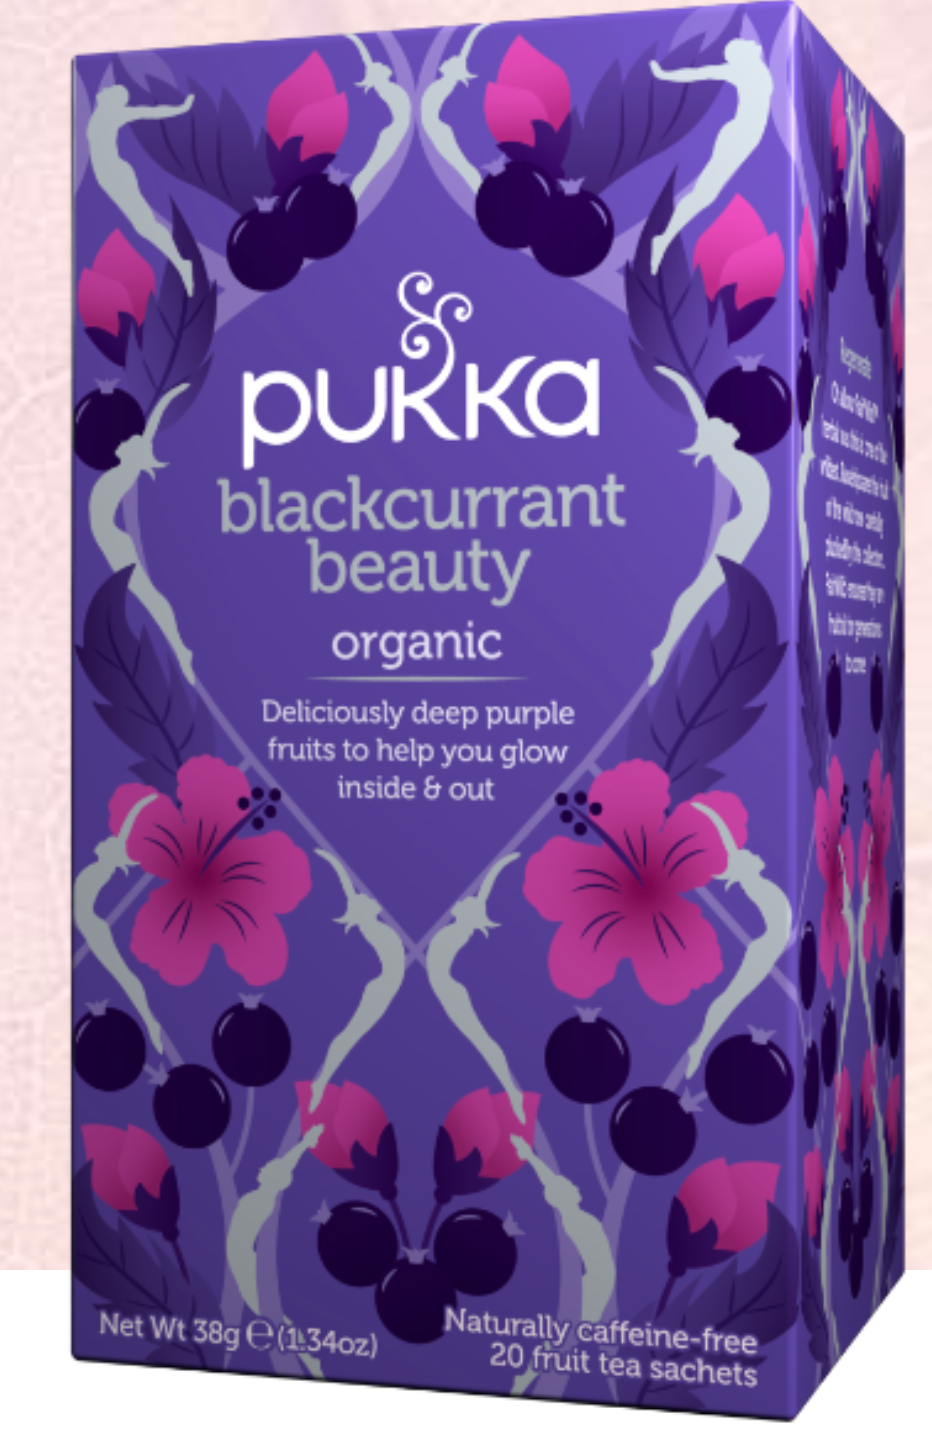 Pukka Tea - blackcurrant beauty